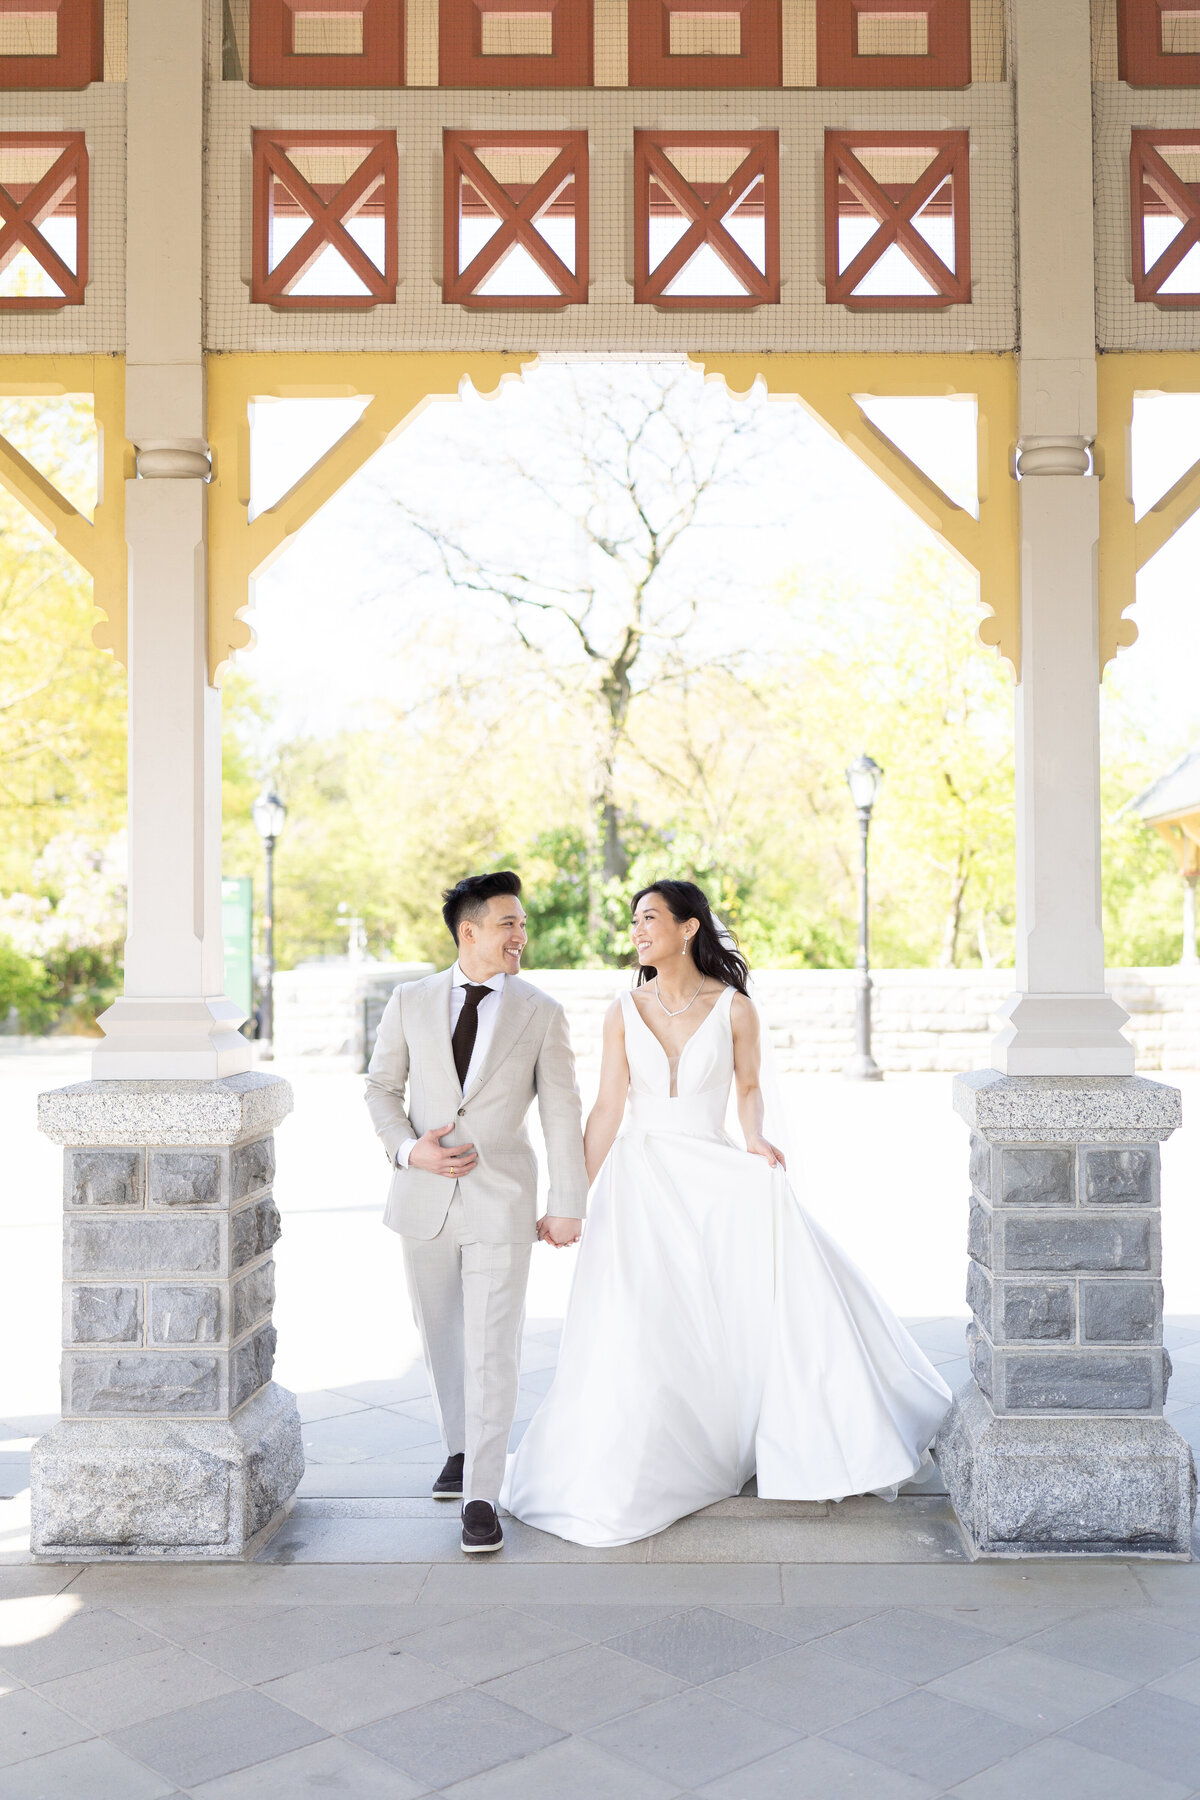 Amanda Gomez Photography - Central Park Wedding Photographer - 8